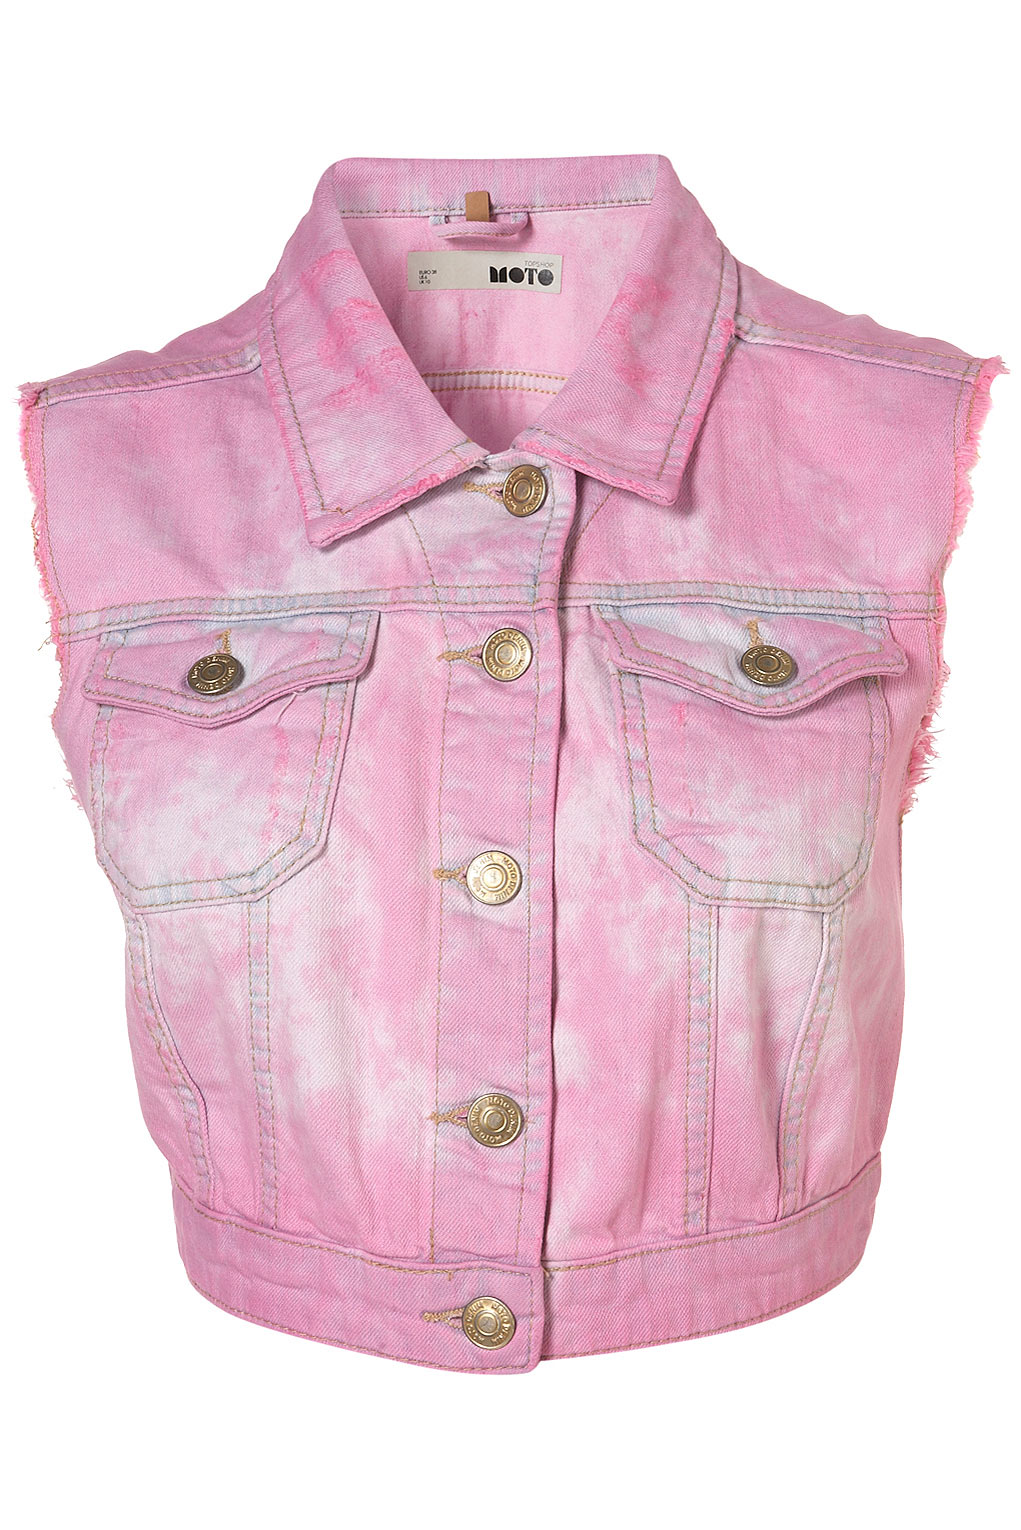 TOPSHOP Pink Marbled Denim Jacket - Lyst